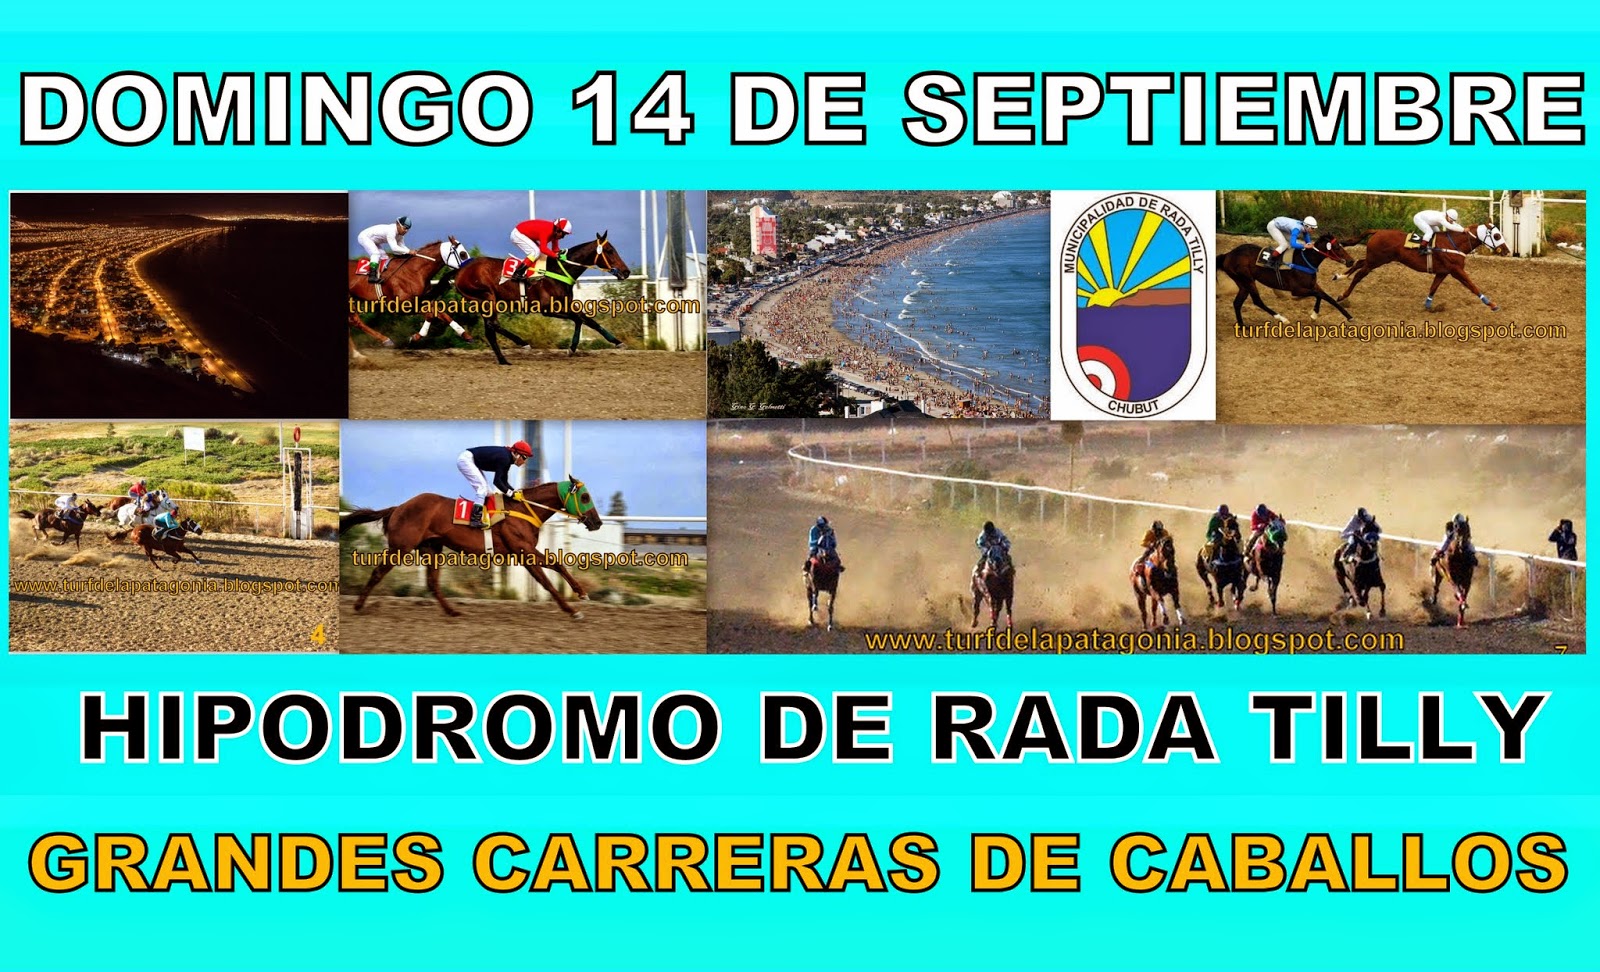 http://turfdelapatagonia.blogspot.com.ar/2014/09/1409-programa-de-carreras-de-caballos_62.html